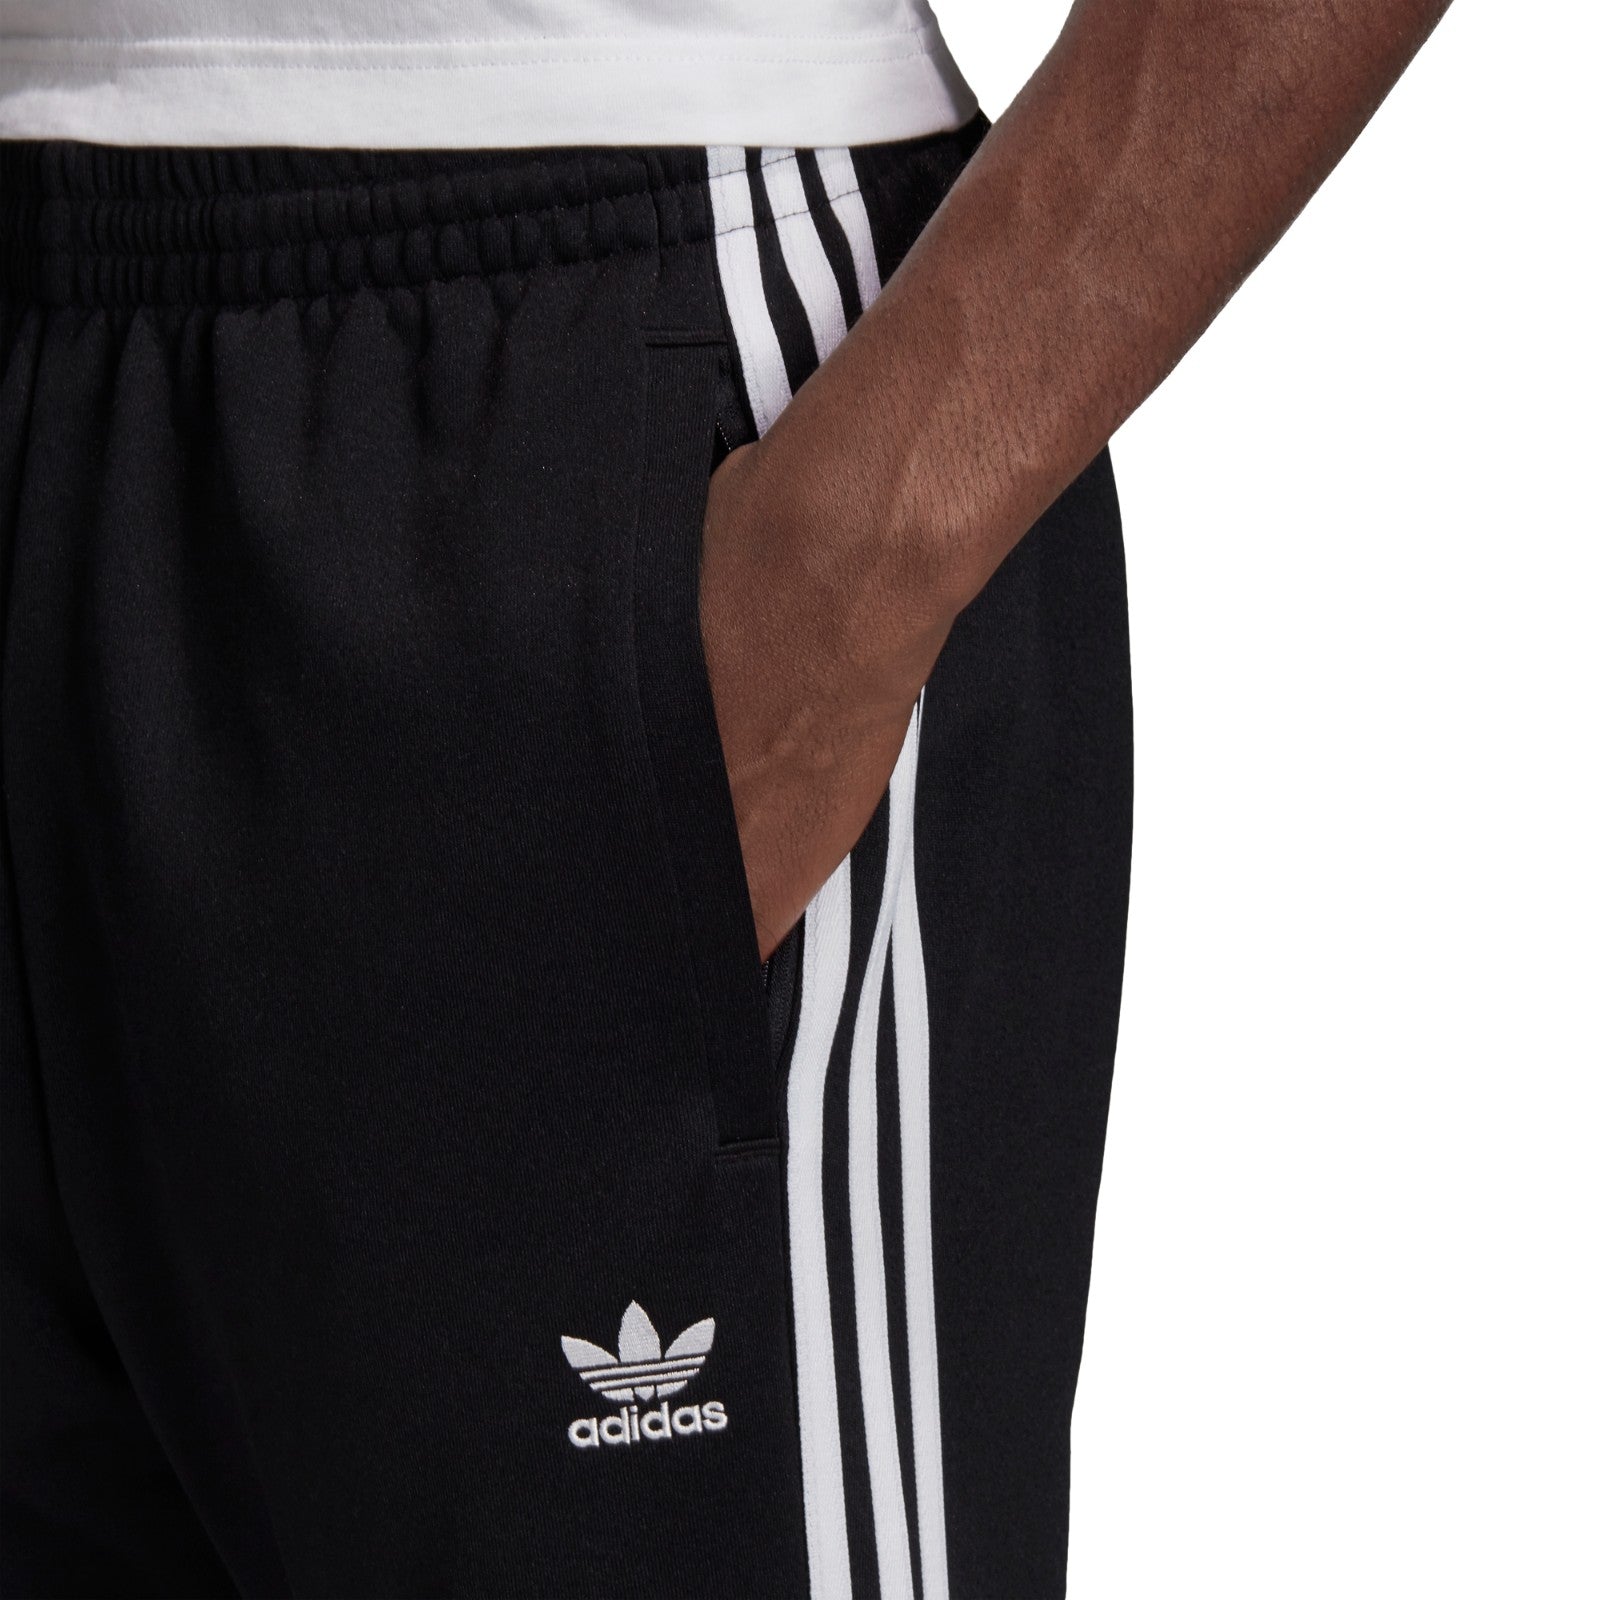 Adidas Men's Neo French Terry 3 Stripe Jogger Sweat Pants, Navy, Large -  NEW - Walmart.com